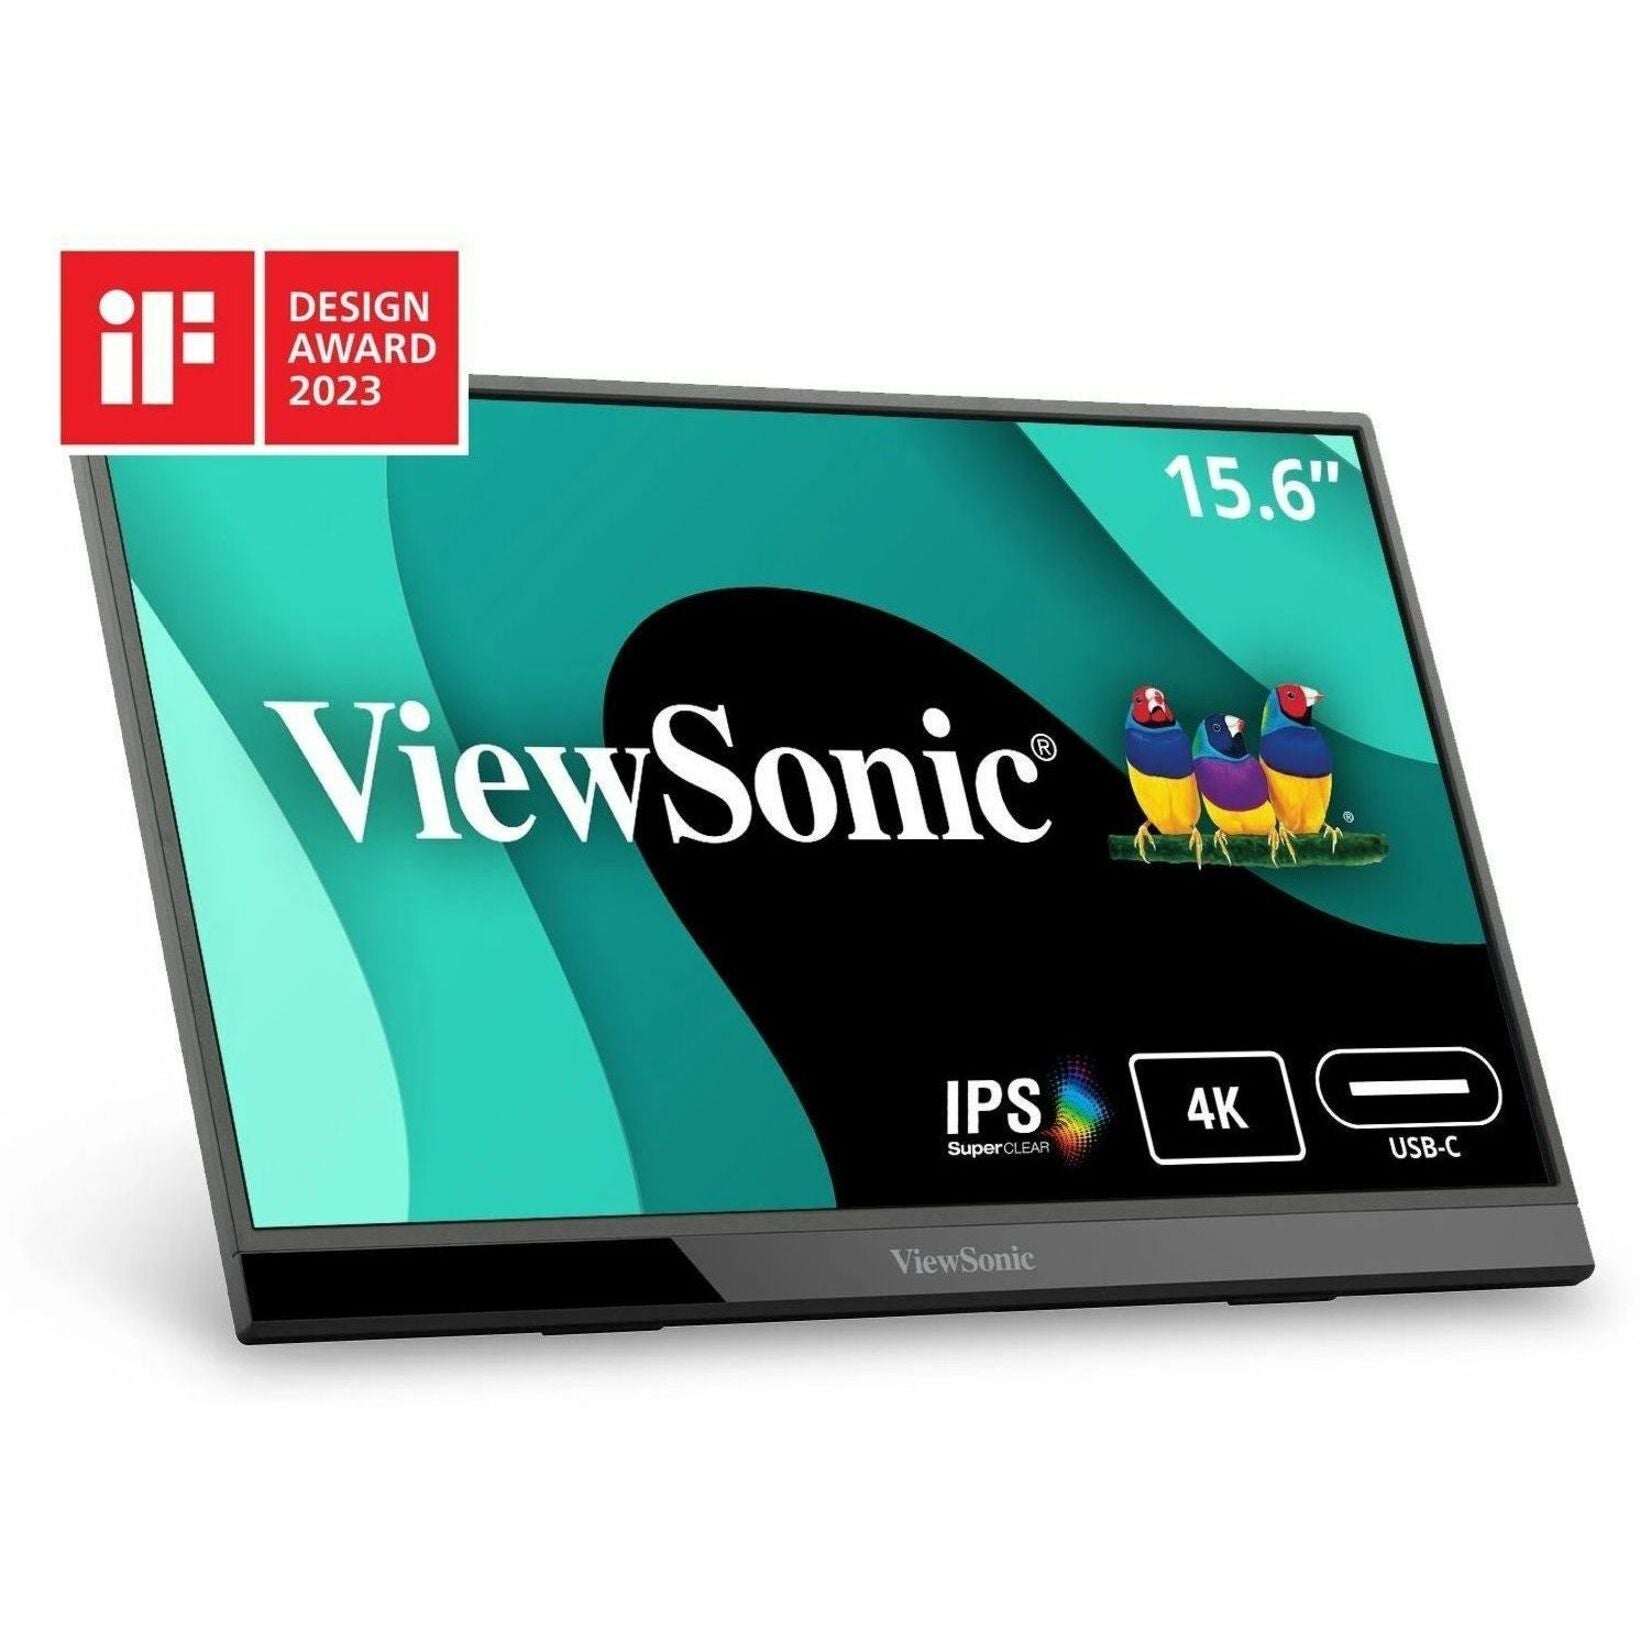 ViewSonic VX1655-4K Gaming LED Monitor, 15.6 4K UHD Portable Monitor with 60W USB C and mini HDMI